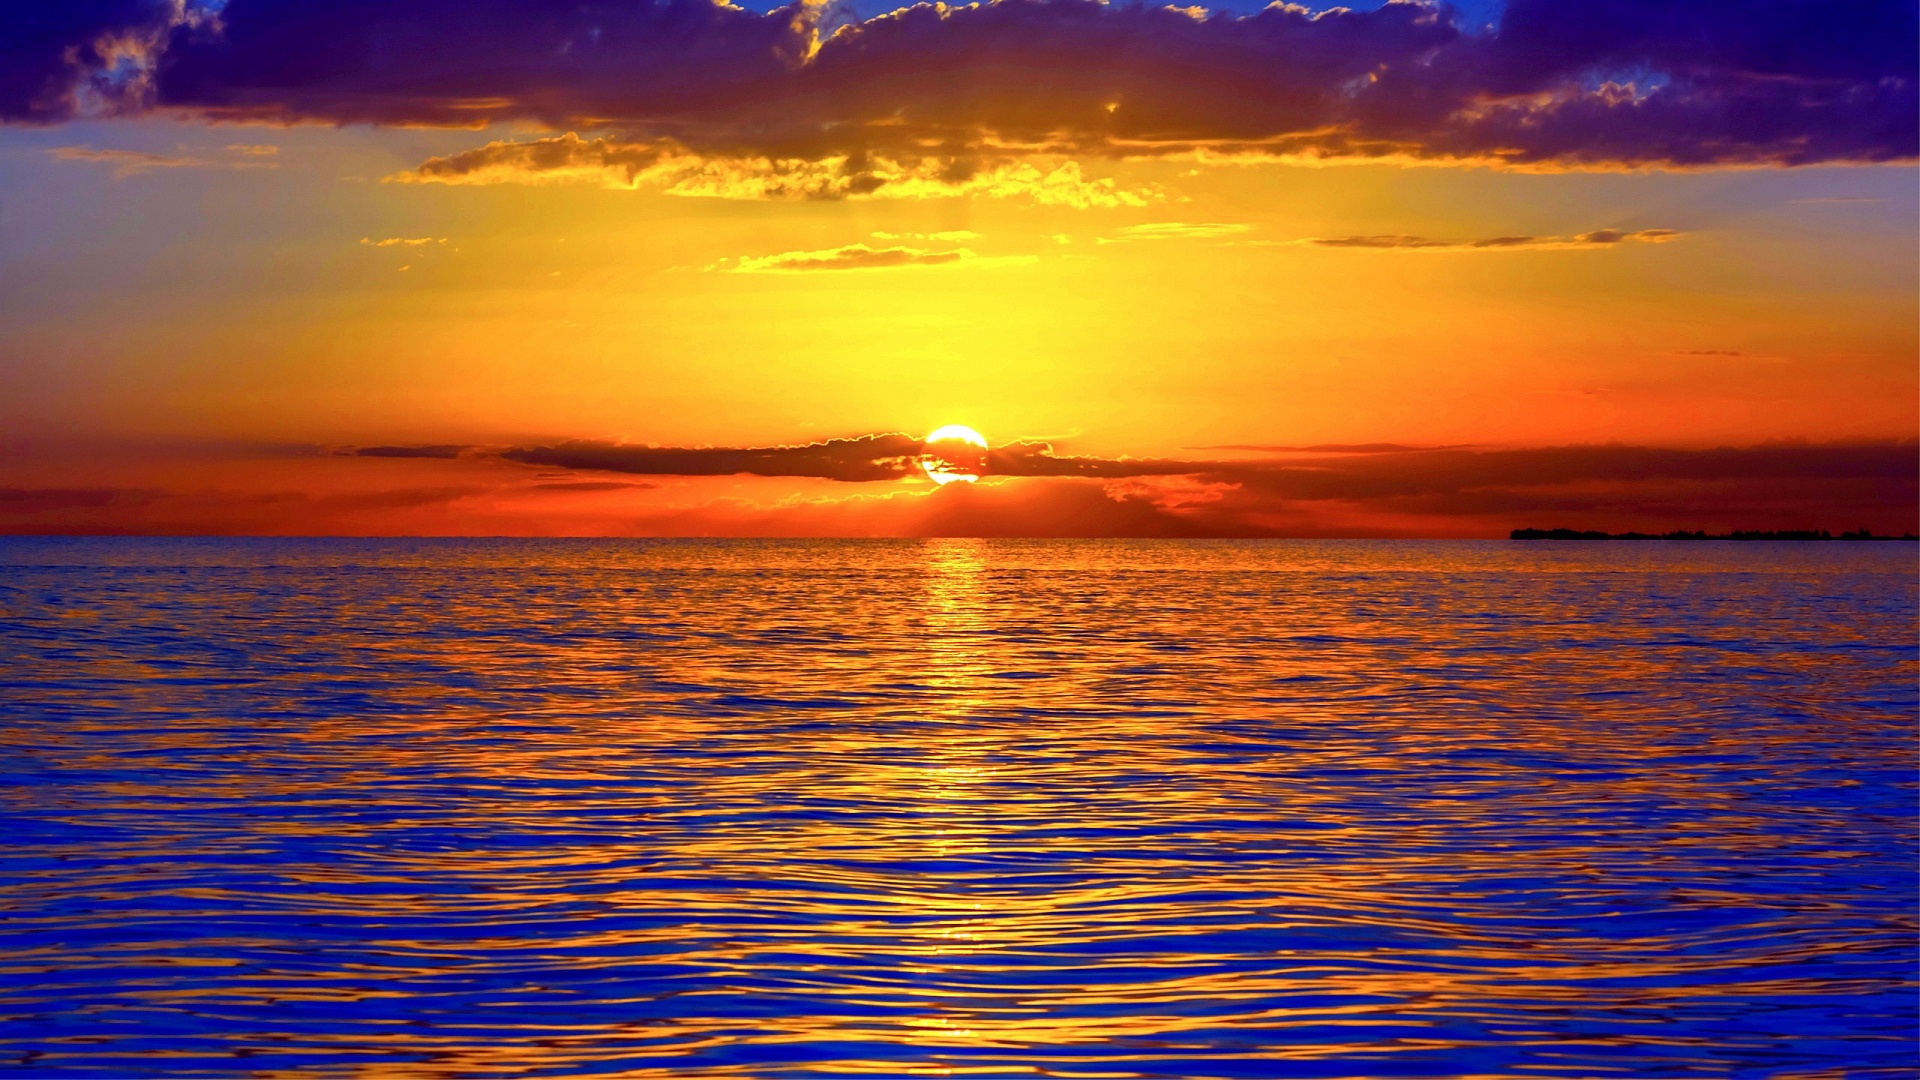 Ocean Sunset Widescreen Download Free Desktop Wallpaper Images